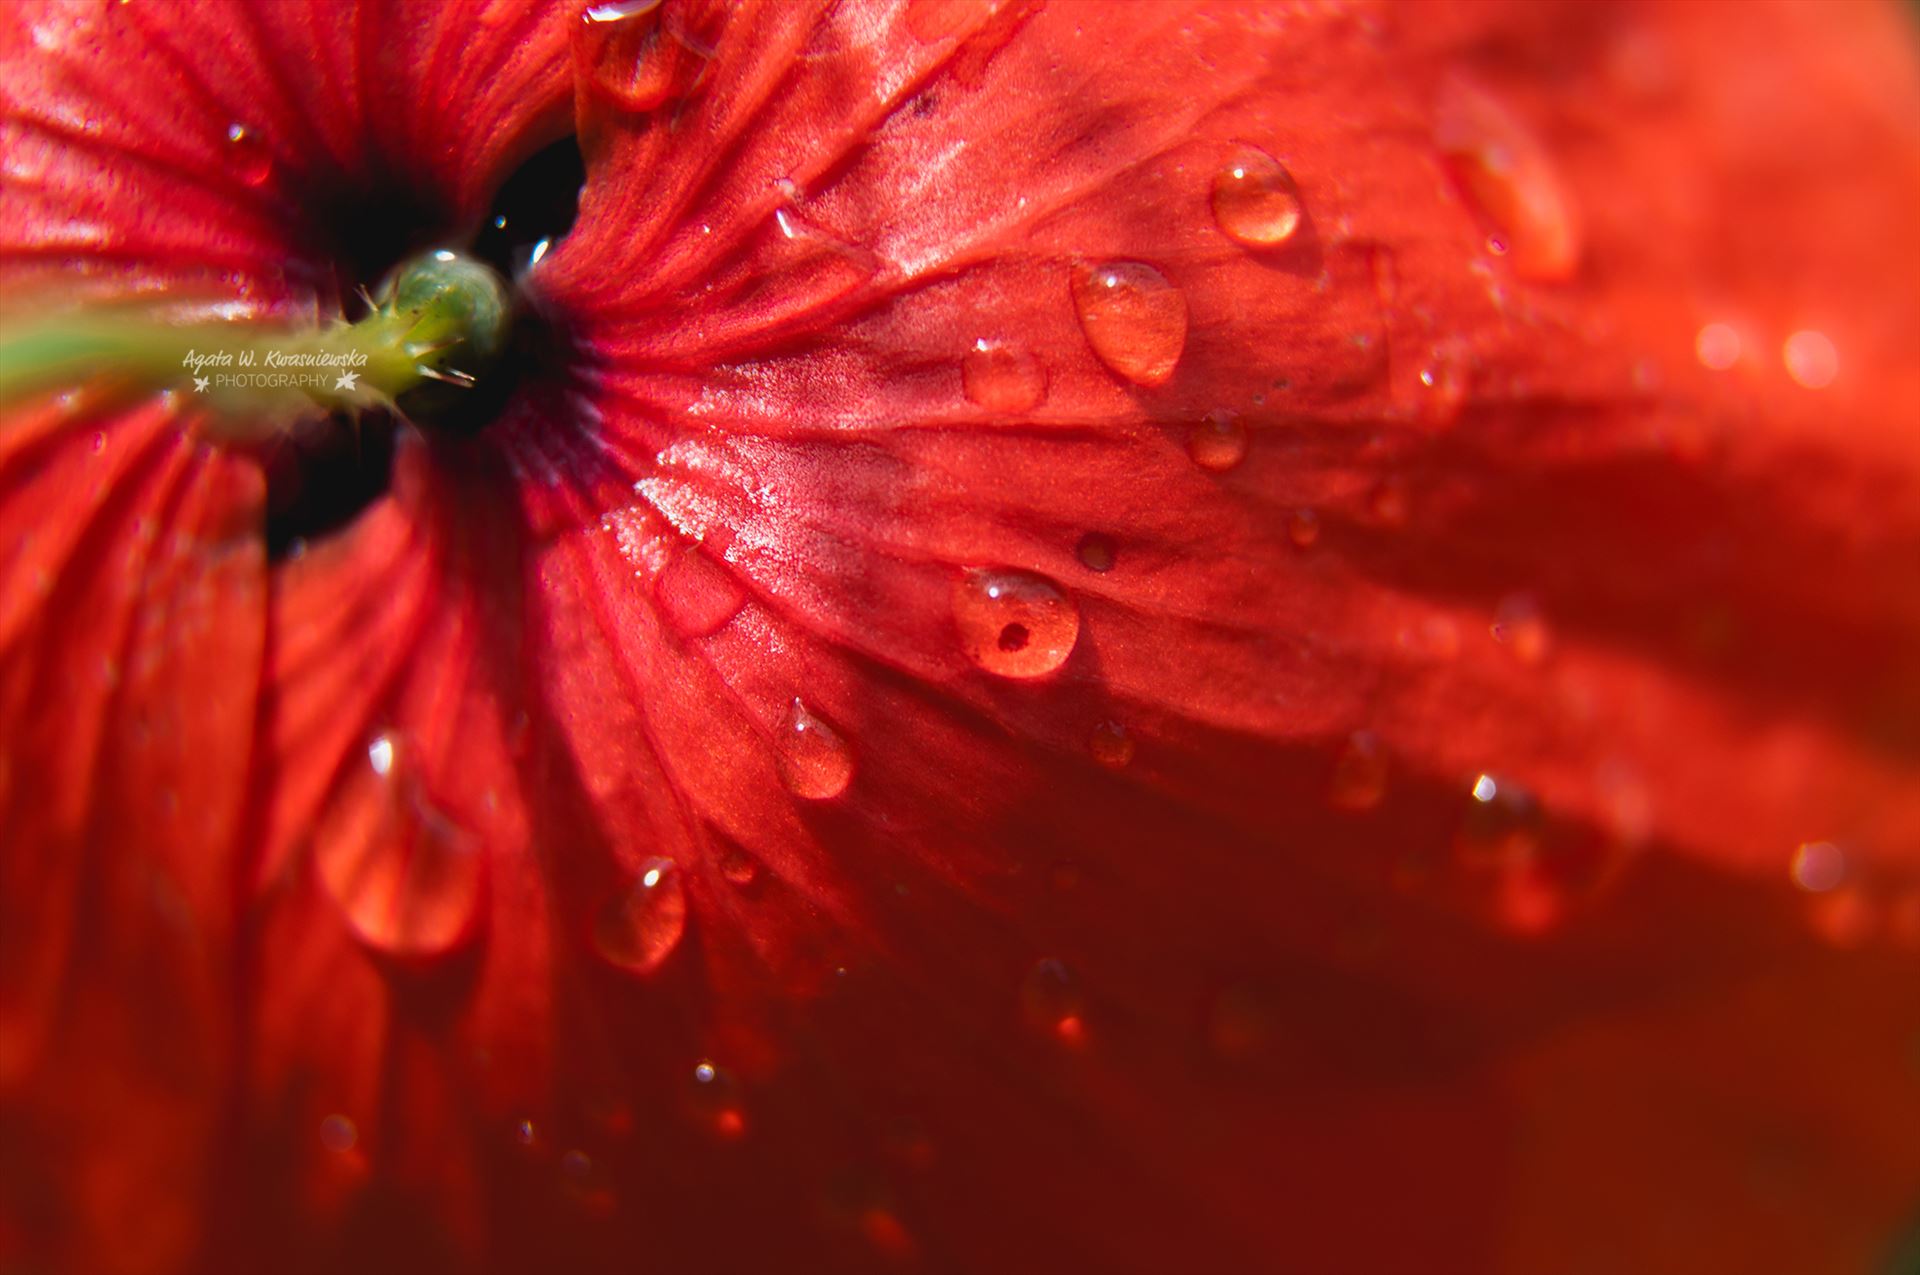 Droplets  by Agata W. Kwasniewska Photography